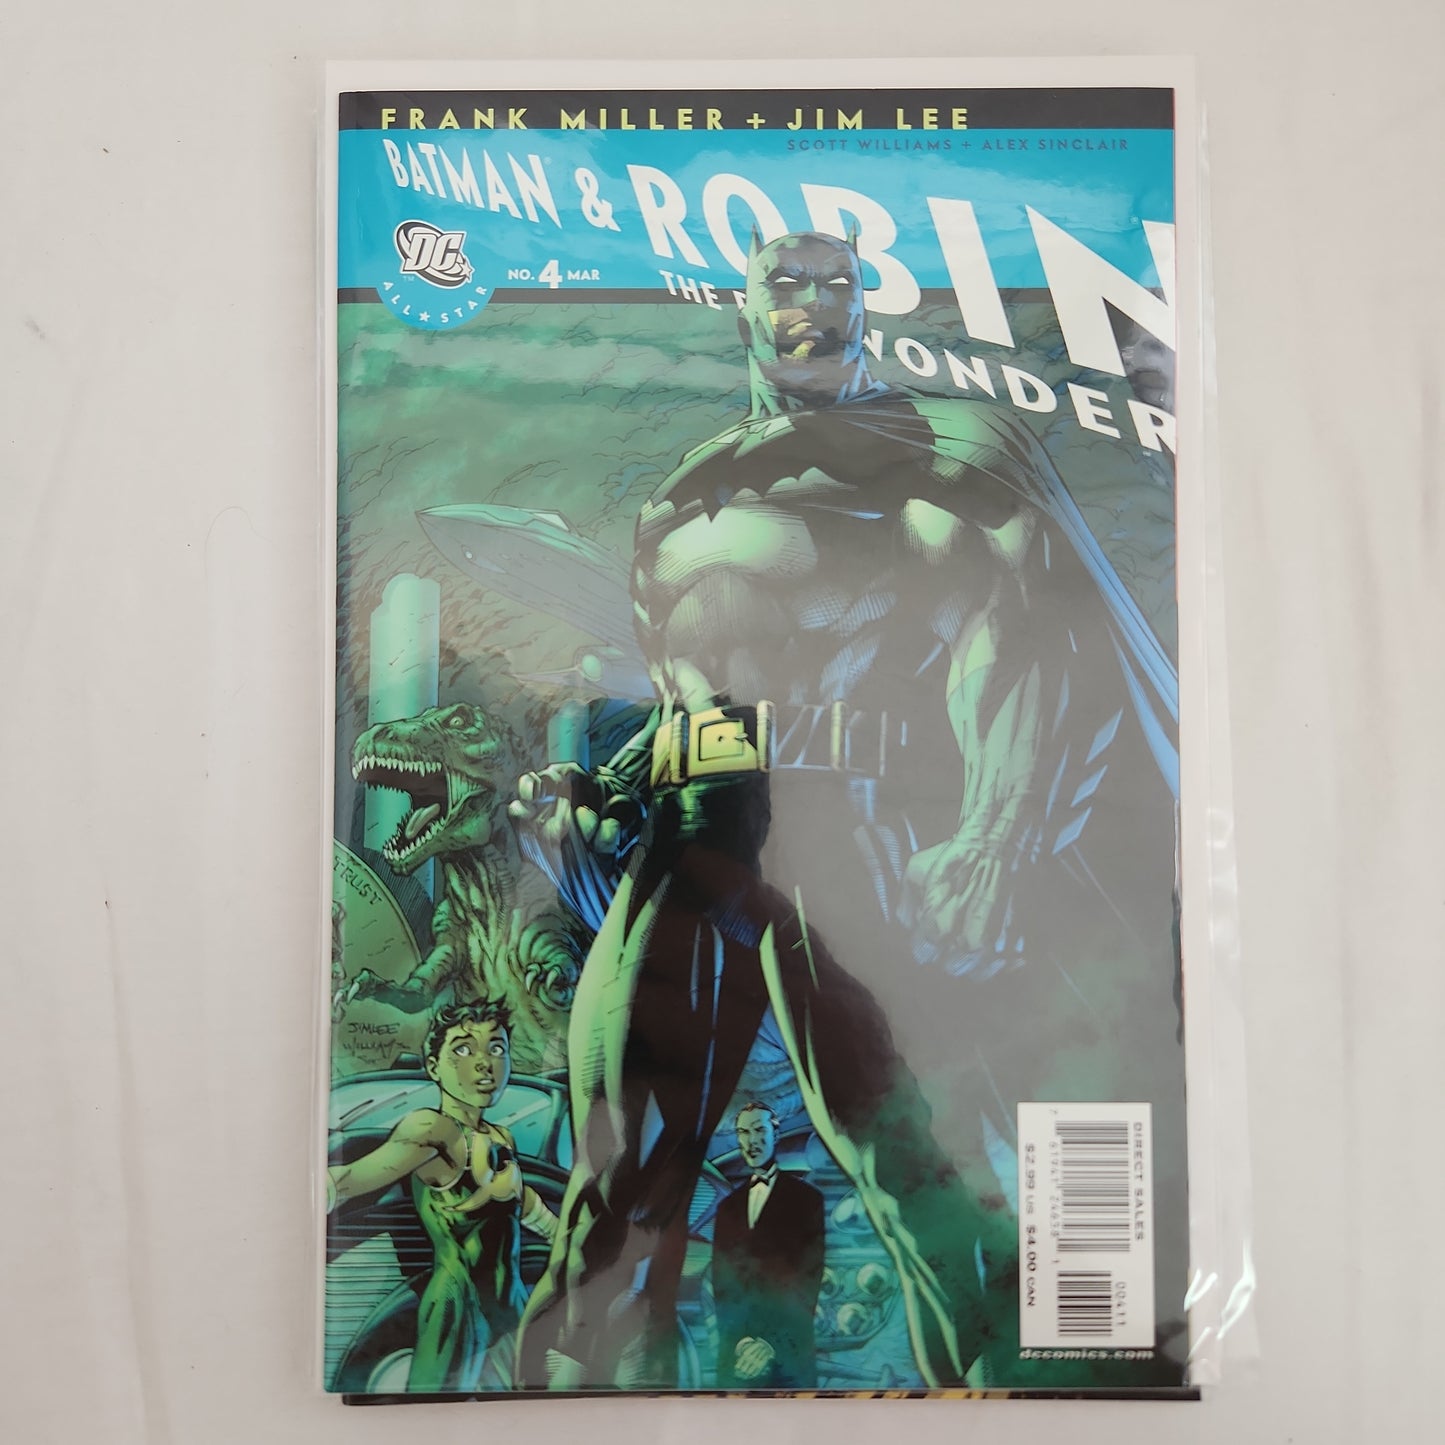 Batman & Robin All Star Series Comic Books 1-9 - Mint Condition